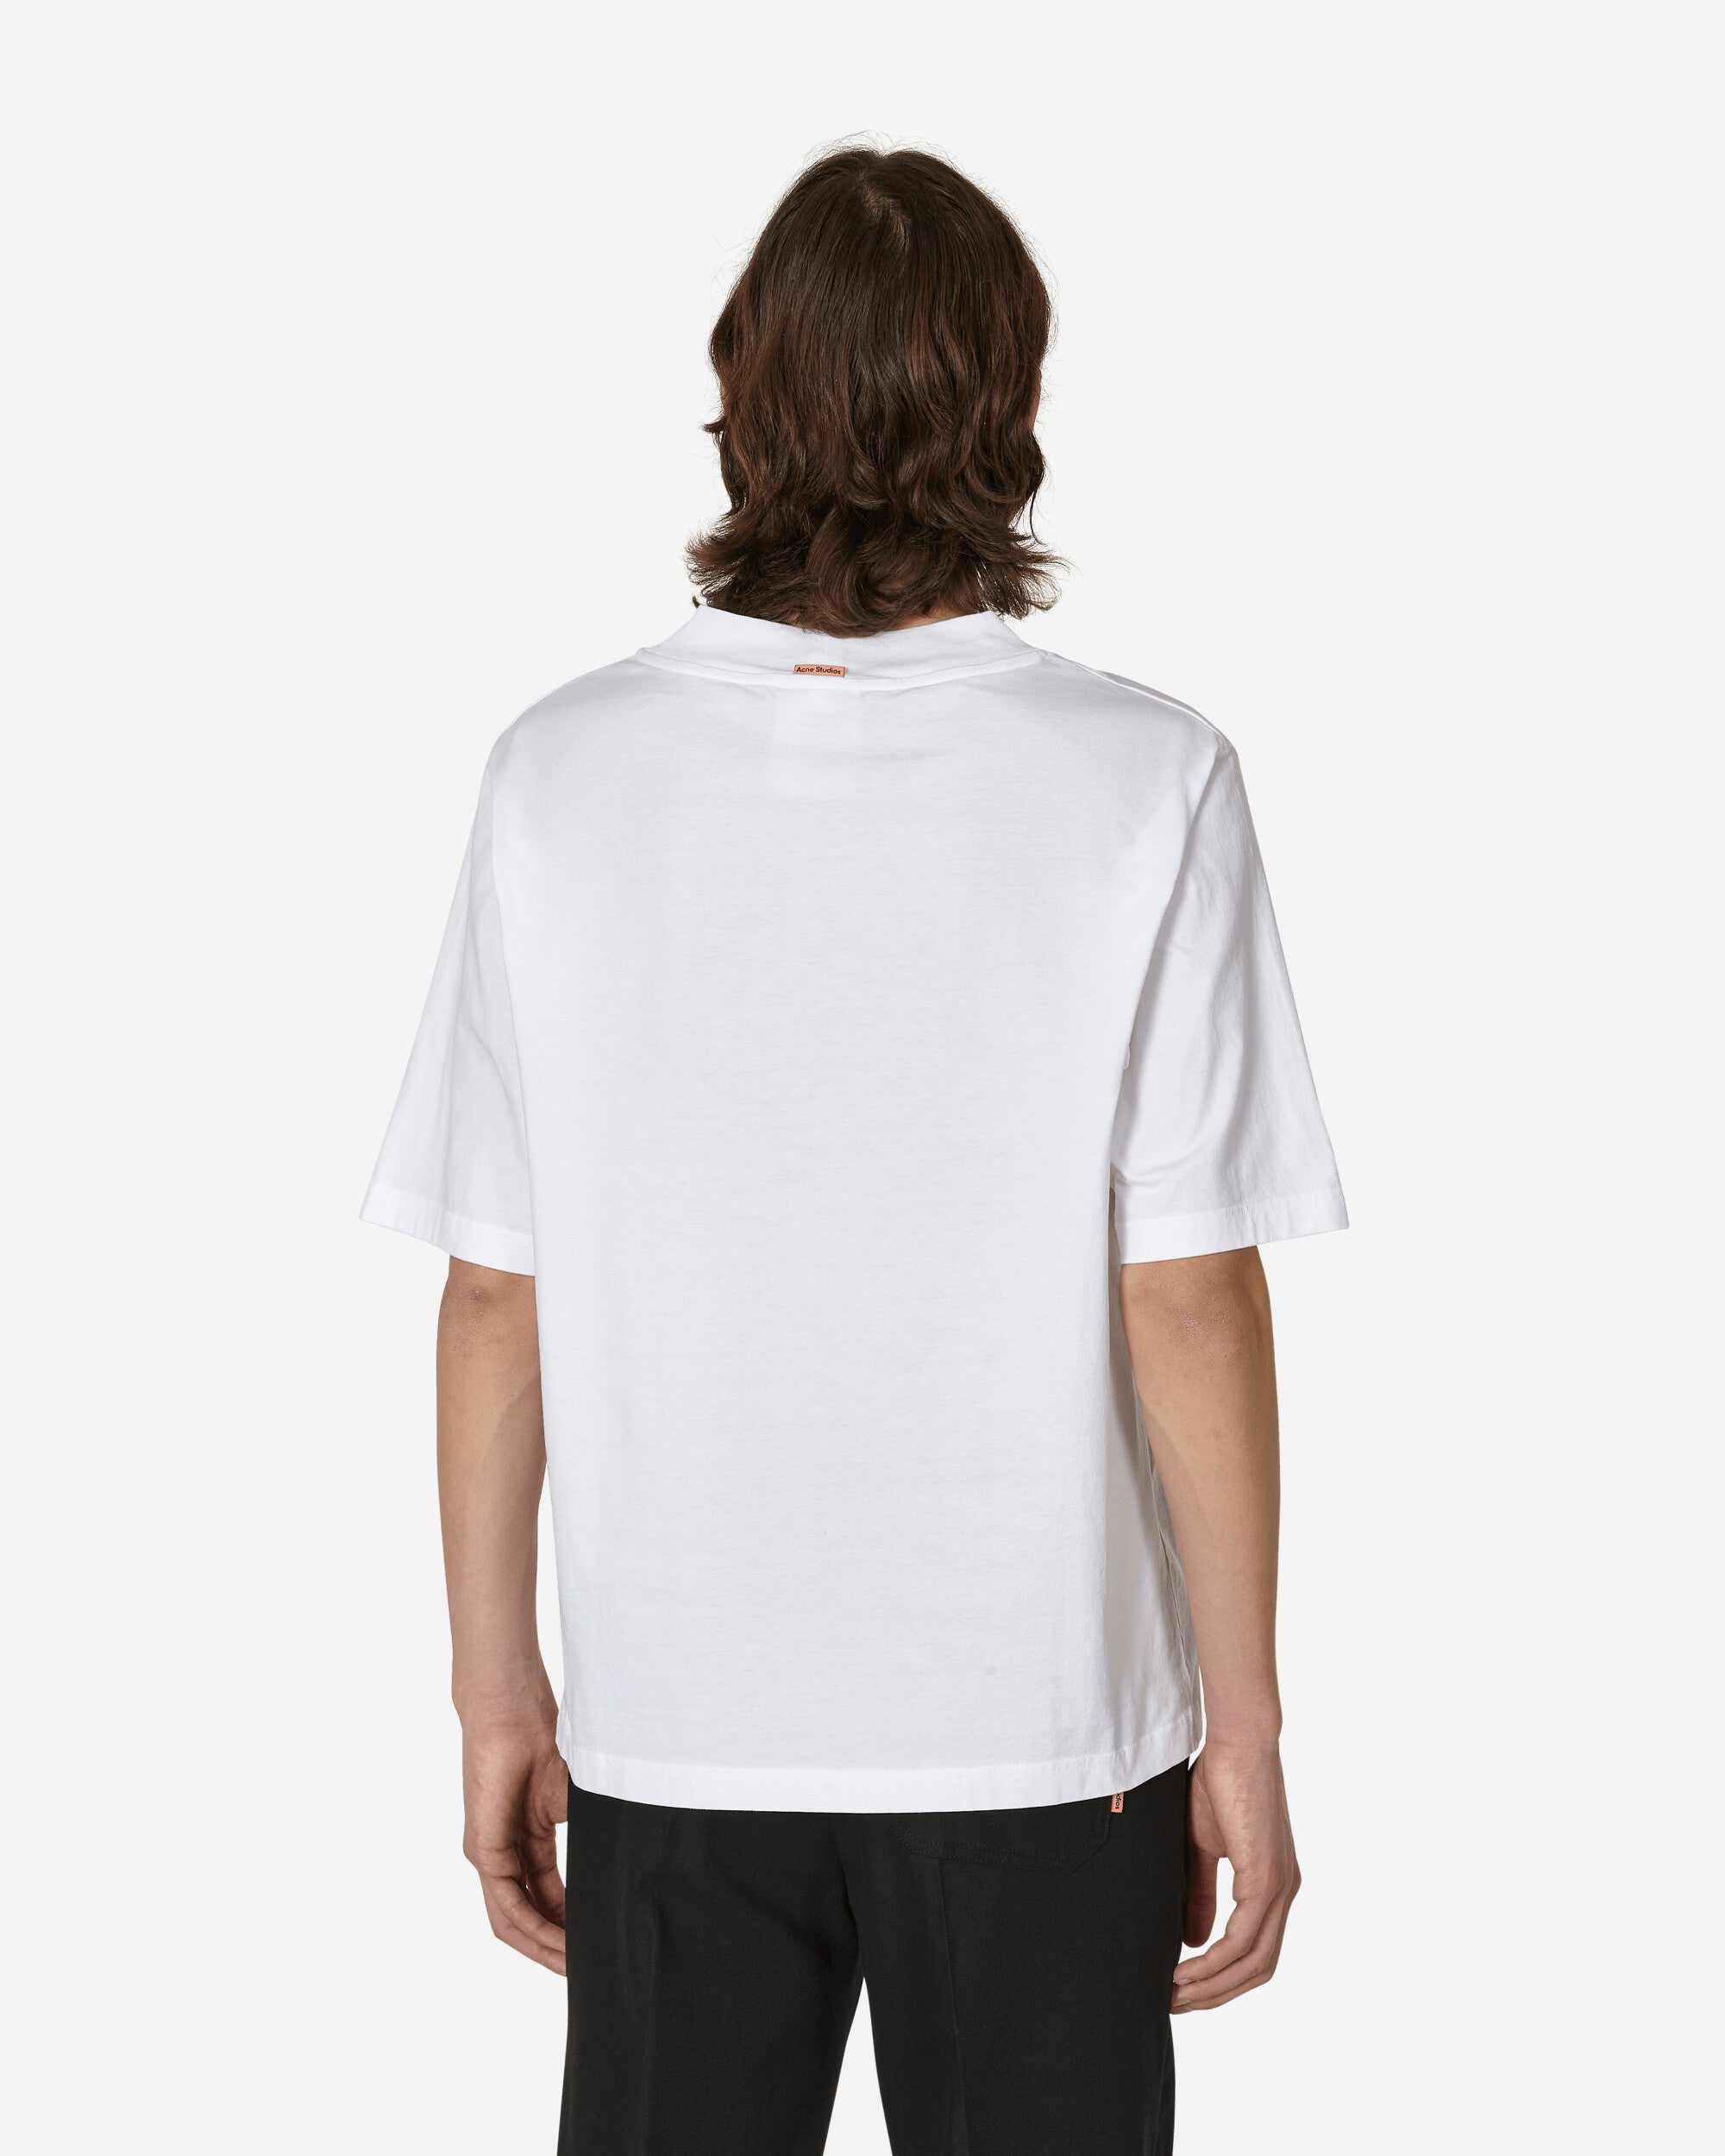 Acne Studios Fn-Ux-Tshi000011 Optic White T-Shirts Shortsleeve CL0195- 183